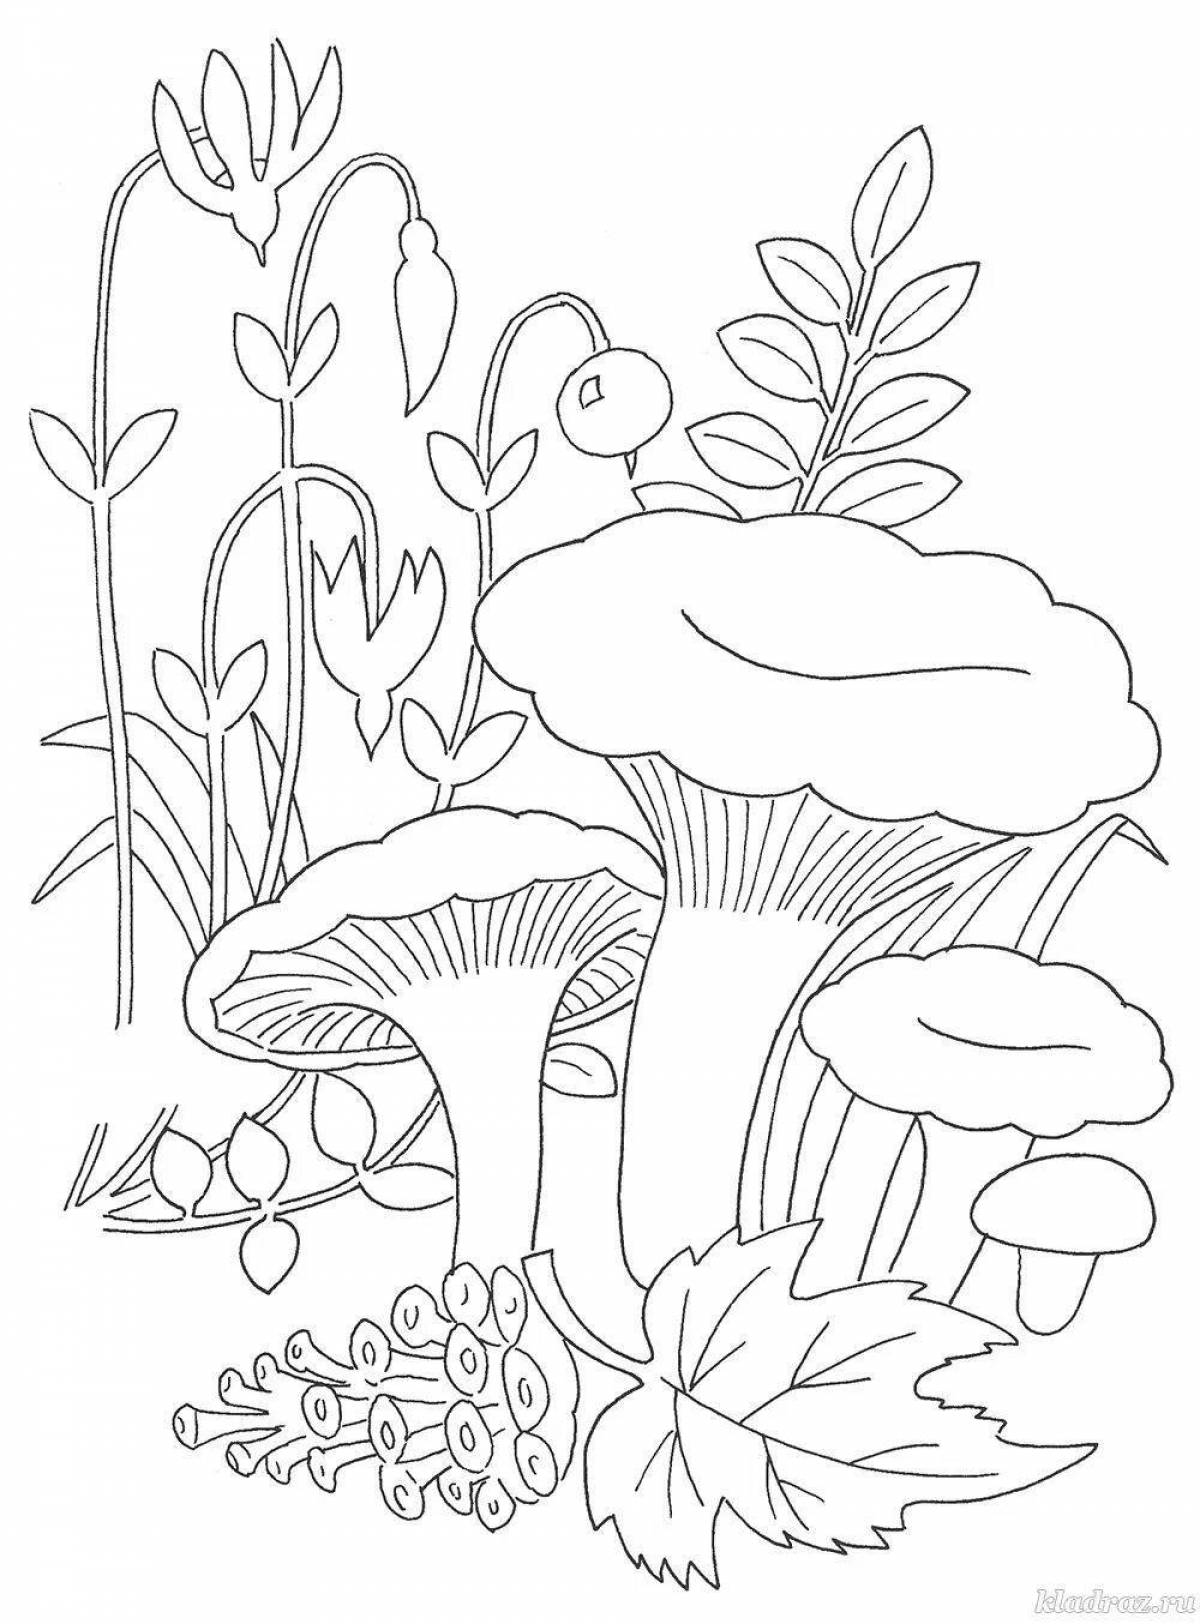 Coloring page joyful chanterelle mushroom